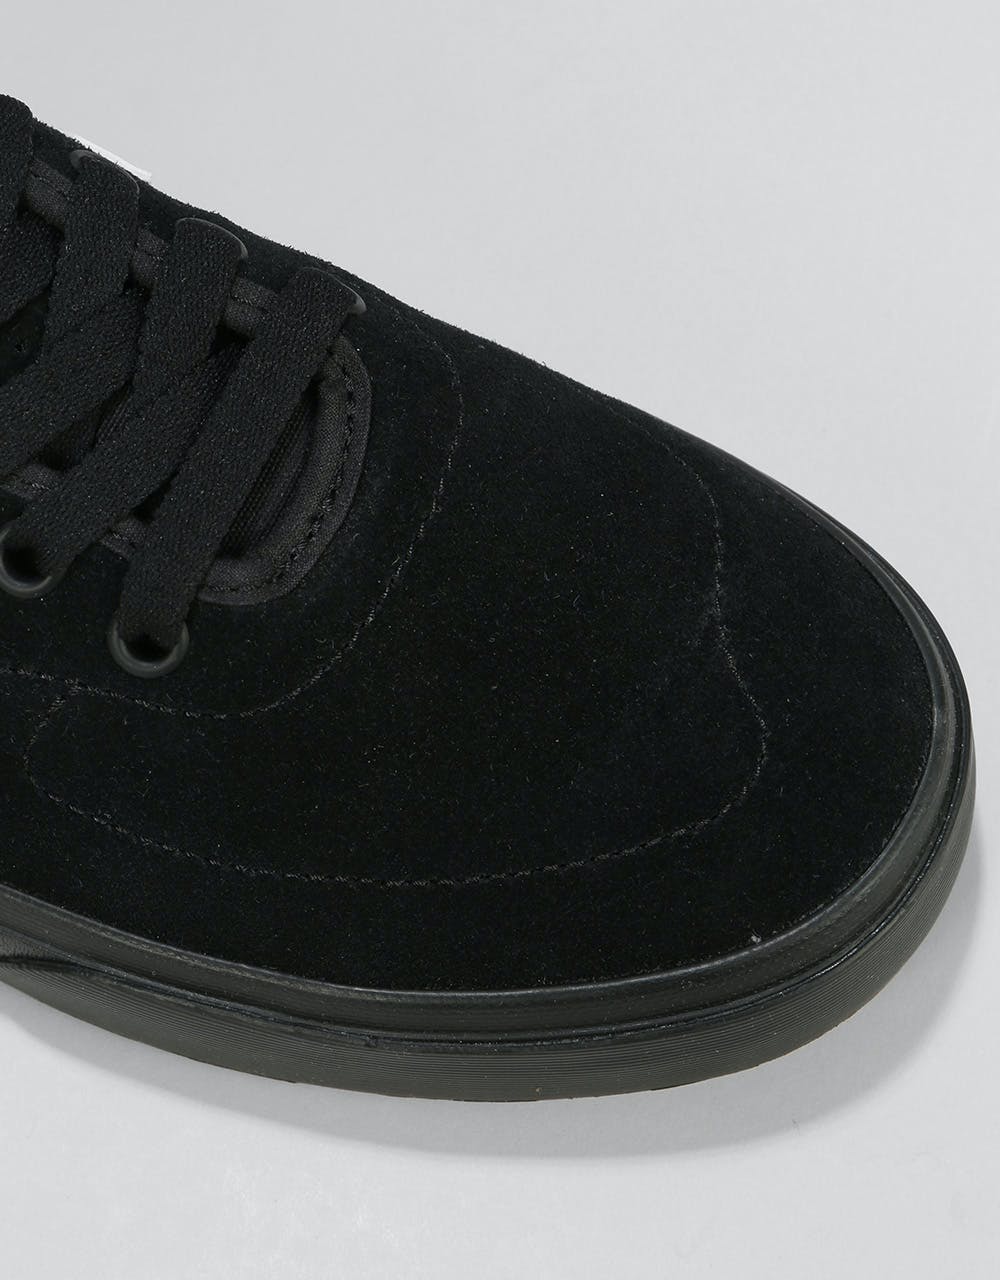 New Balance Numeric 379 Skate Shoes - Black/White